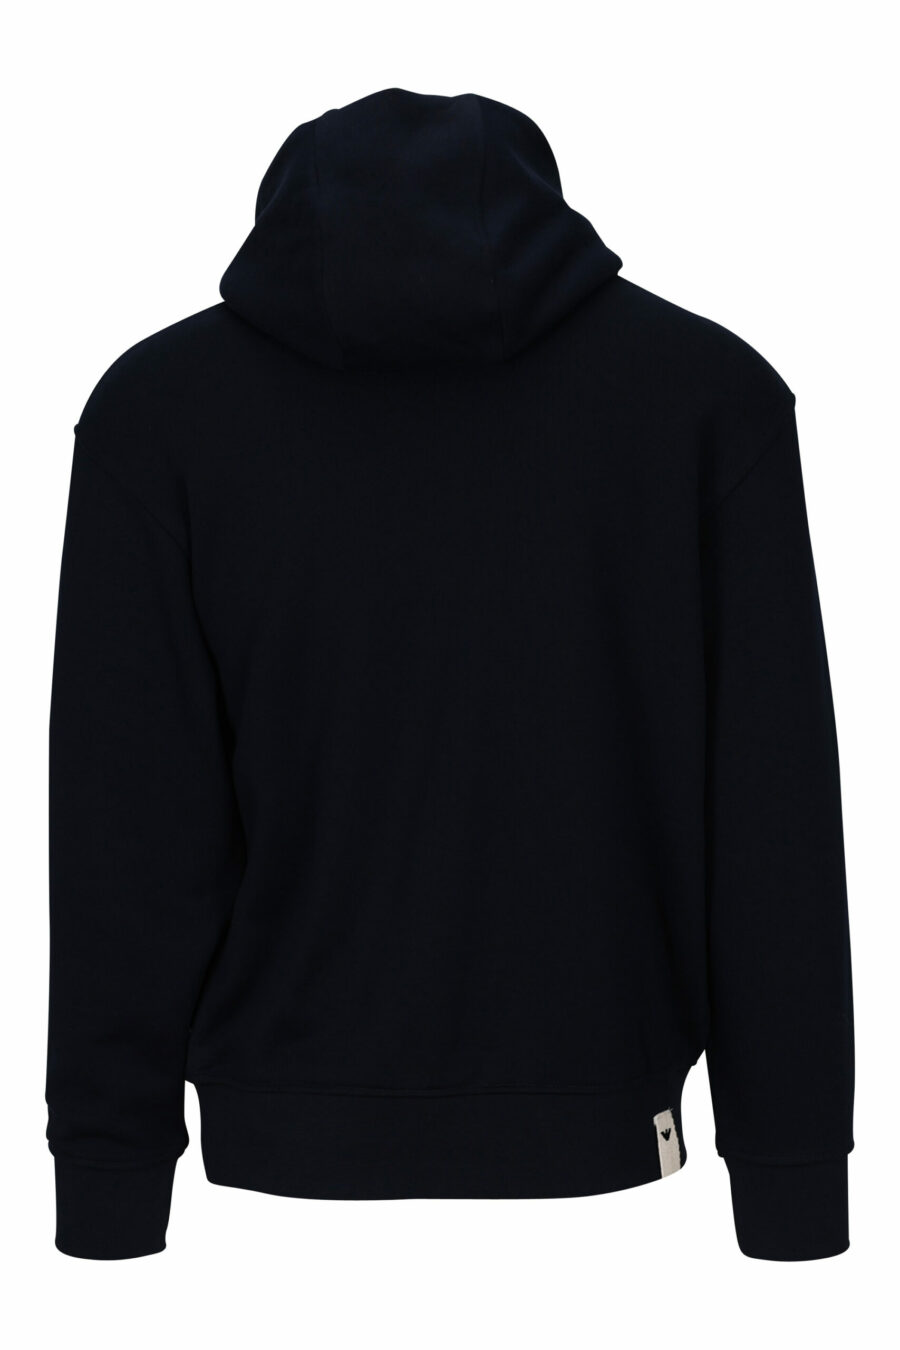 Dark blue hooded sweatshirt with centred logo - 8057767457679 2 scaled